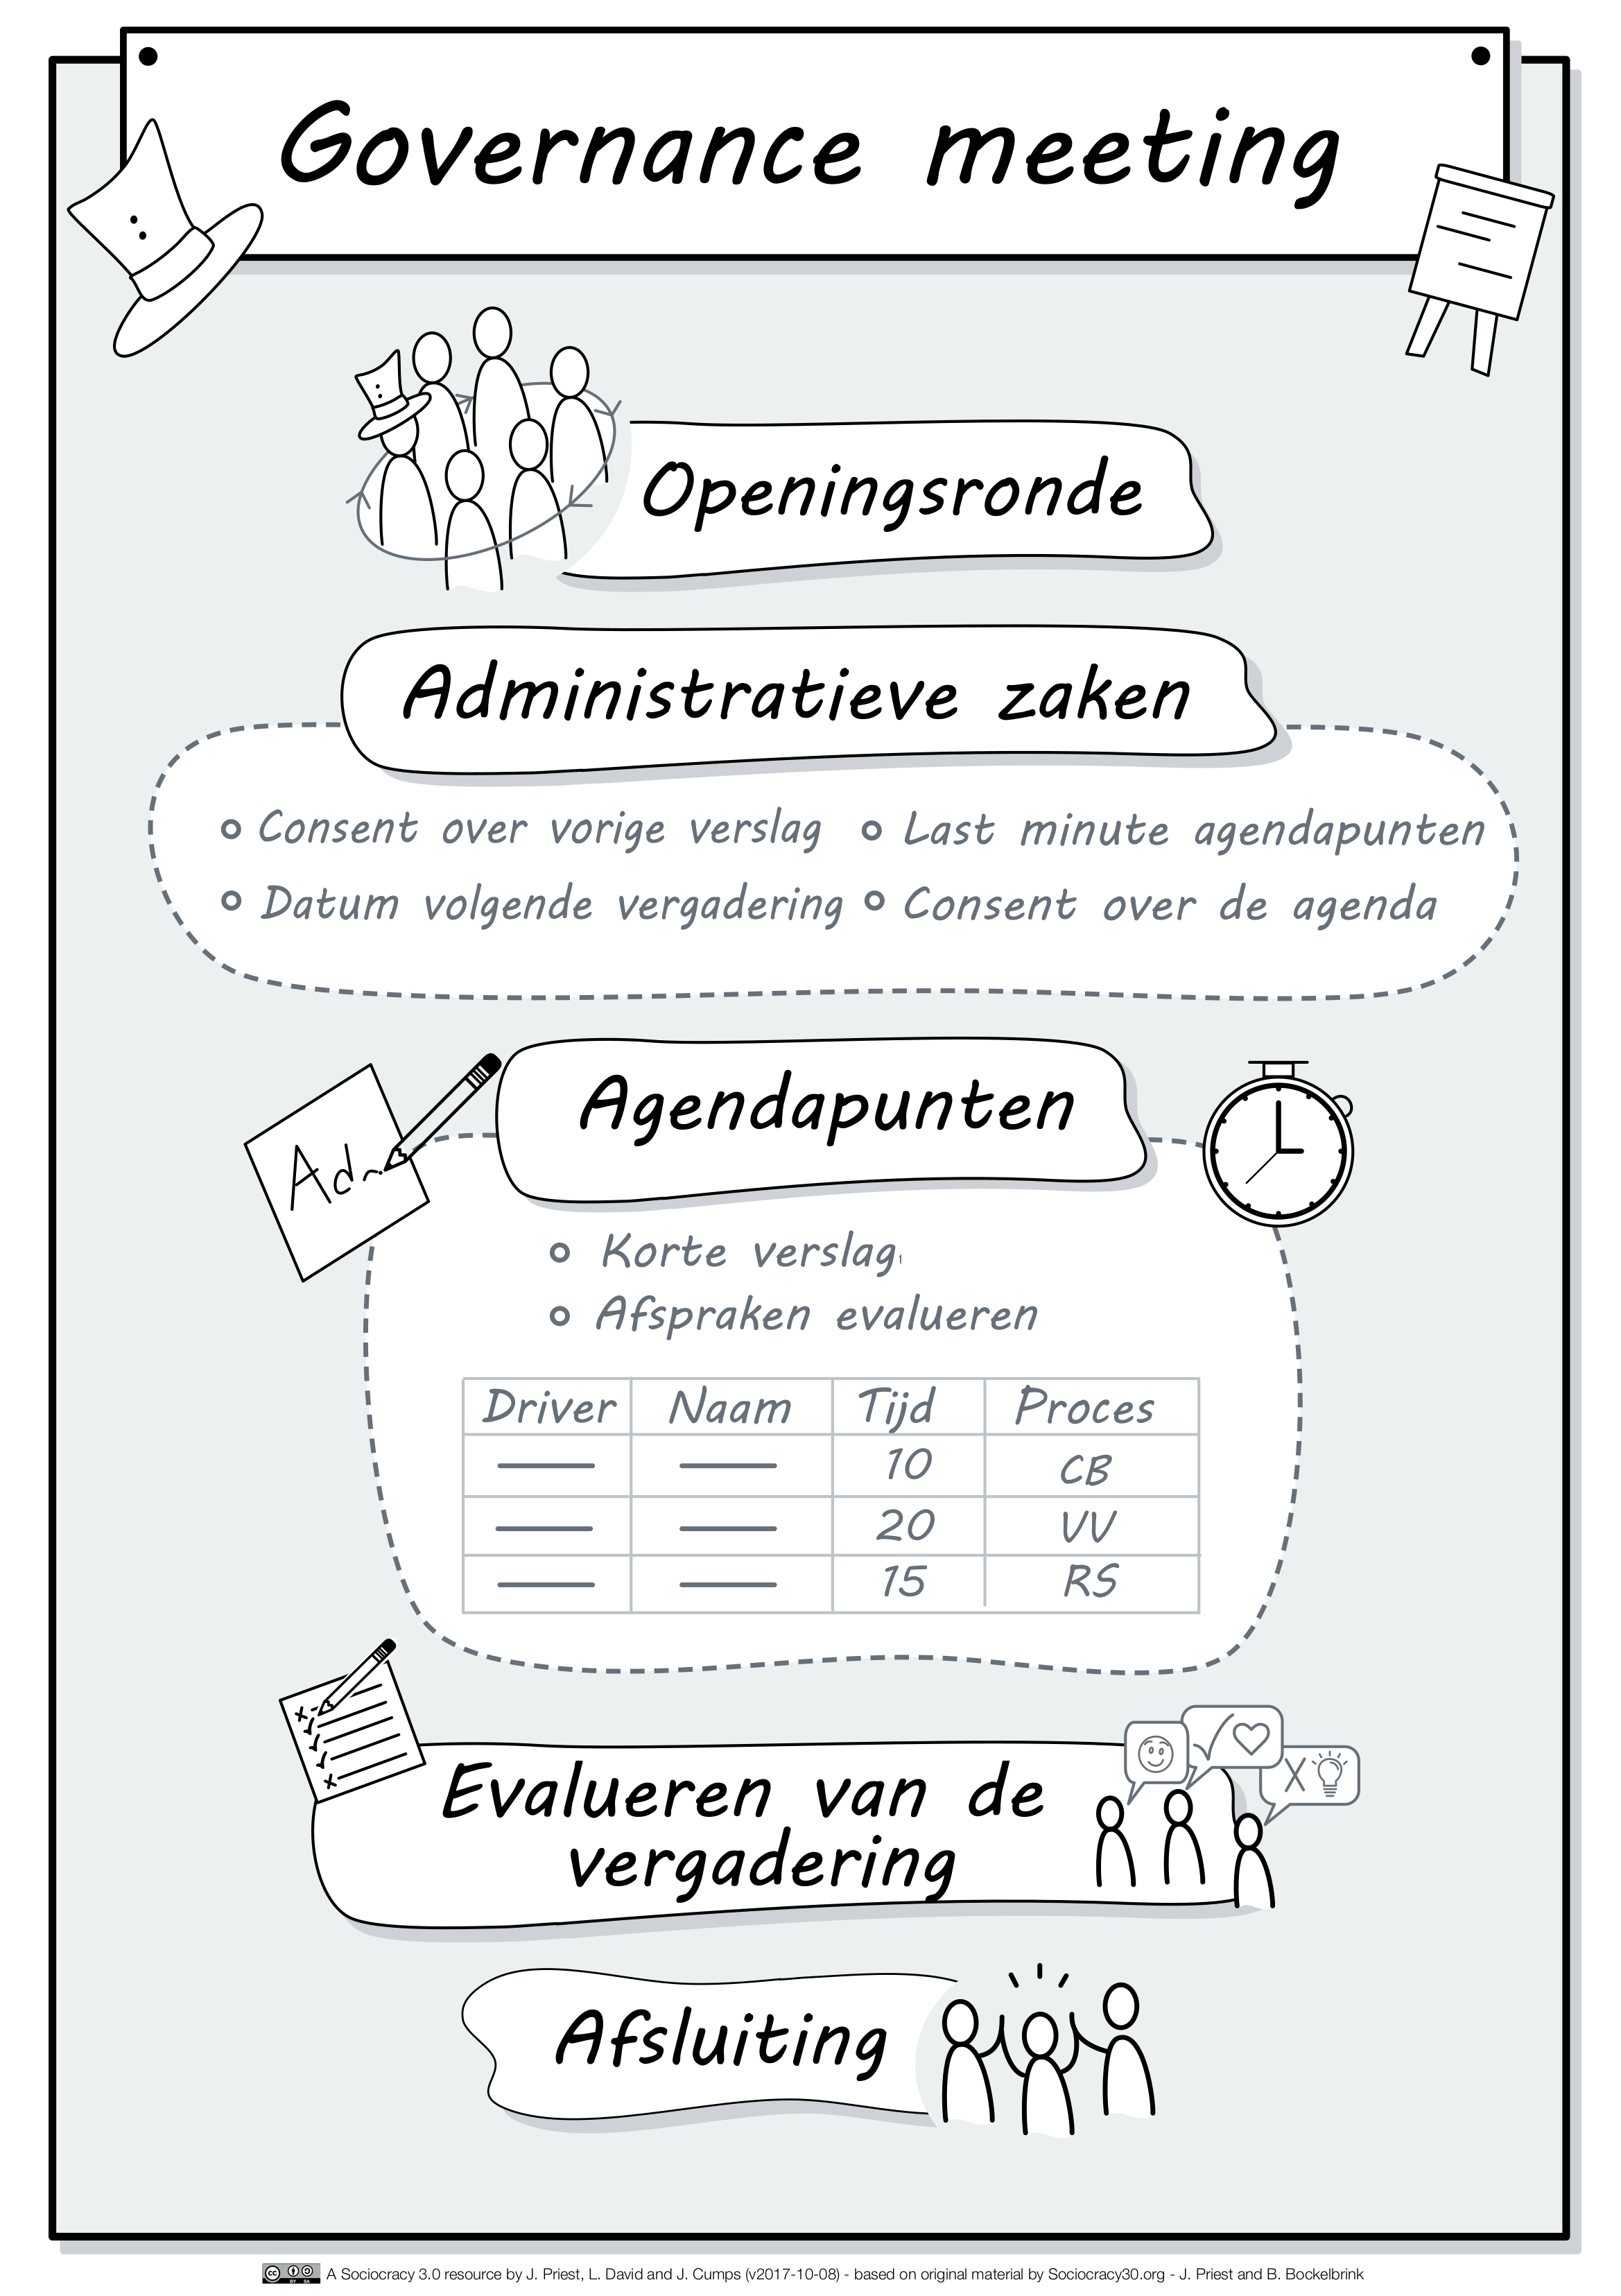 Governance Meeting_NL.png